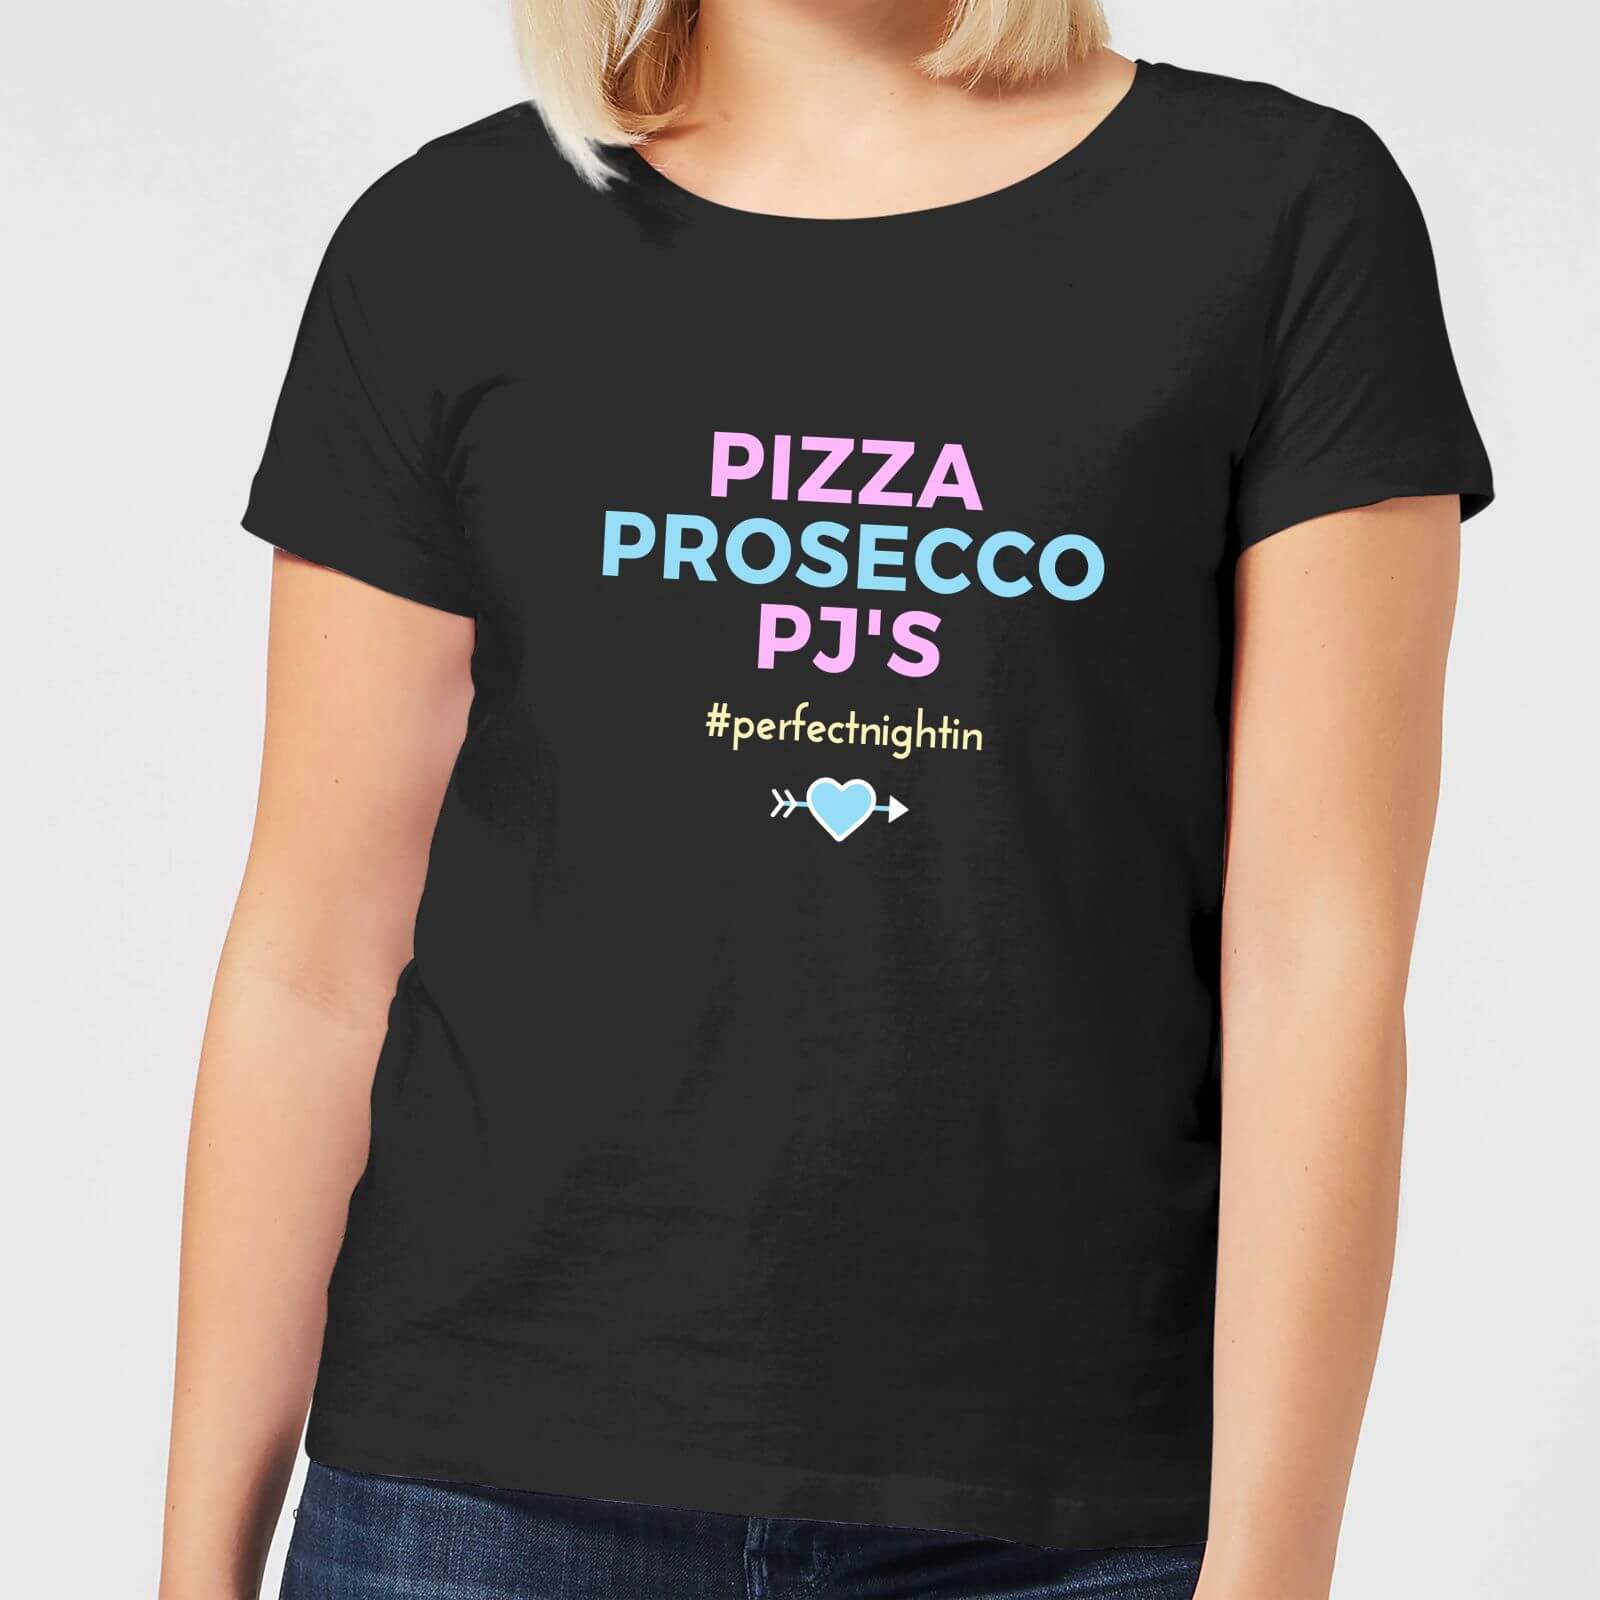 Be My Pretty Pizza Prosecco PJ's Women's T-Shirt - Black - 4XL - Black